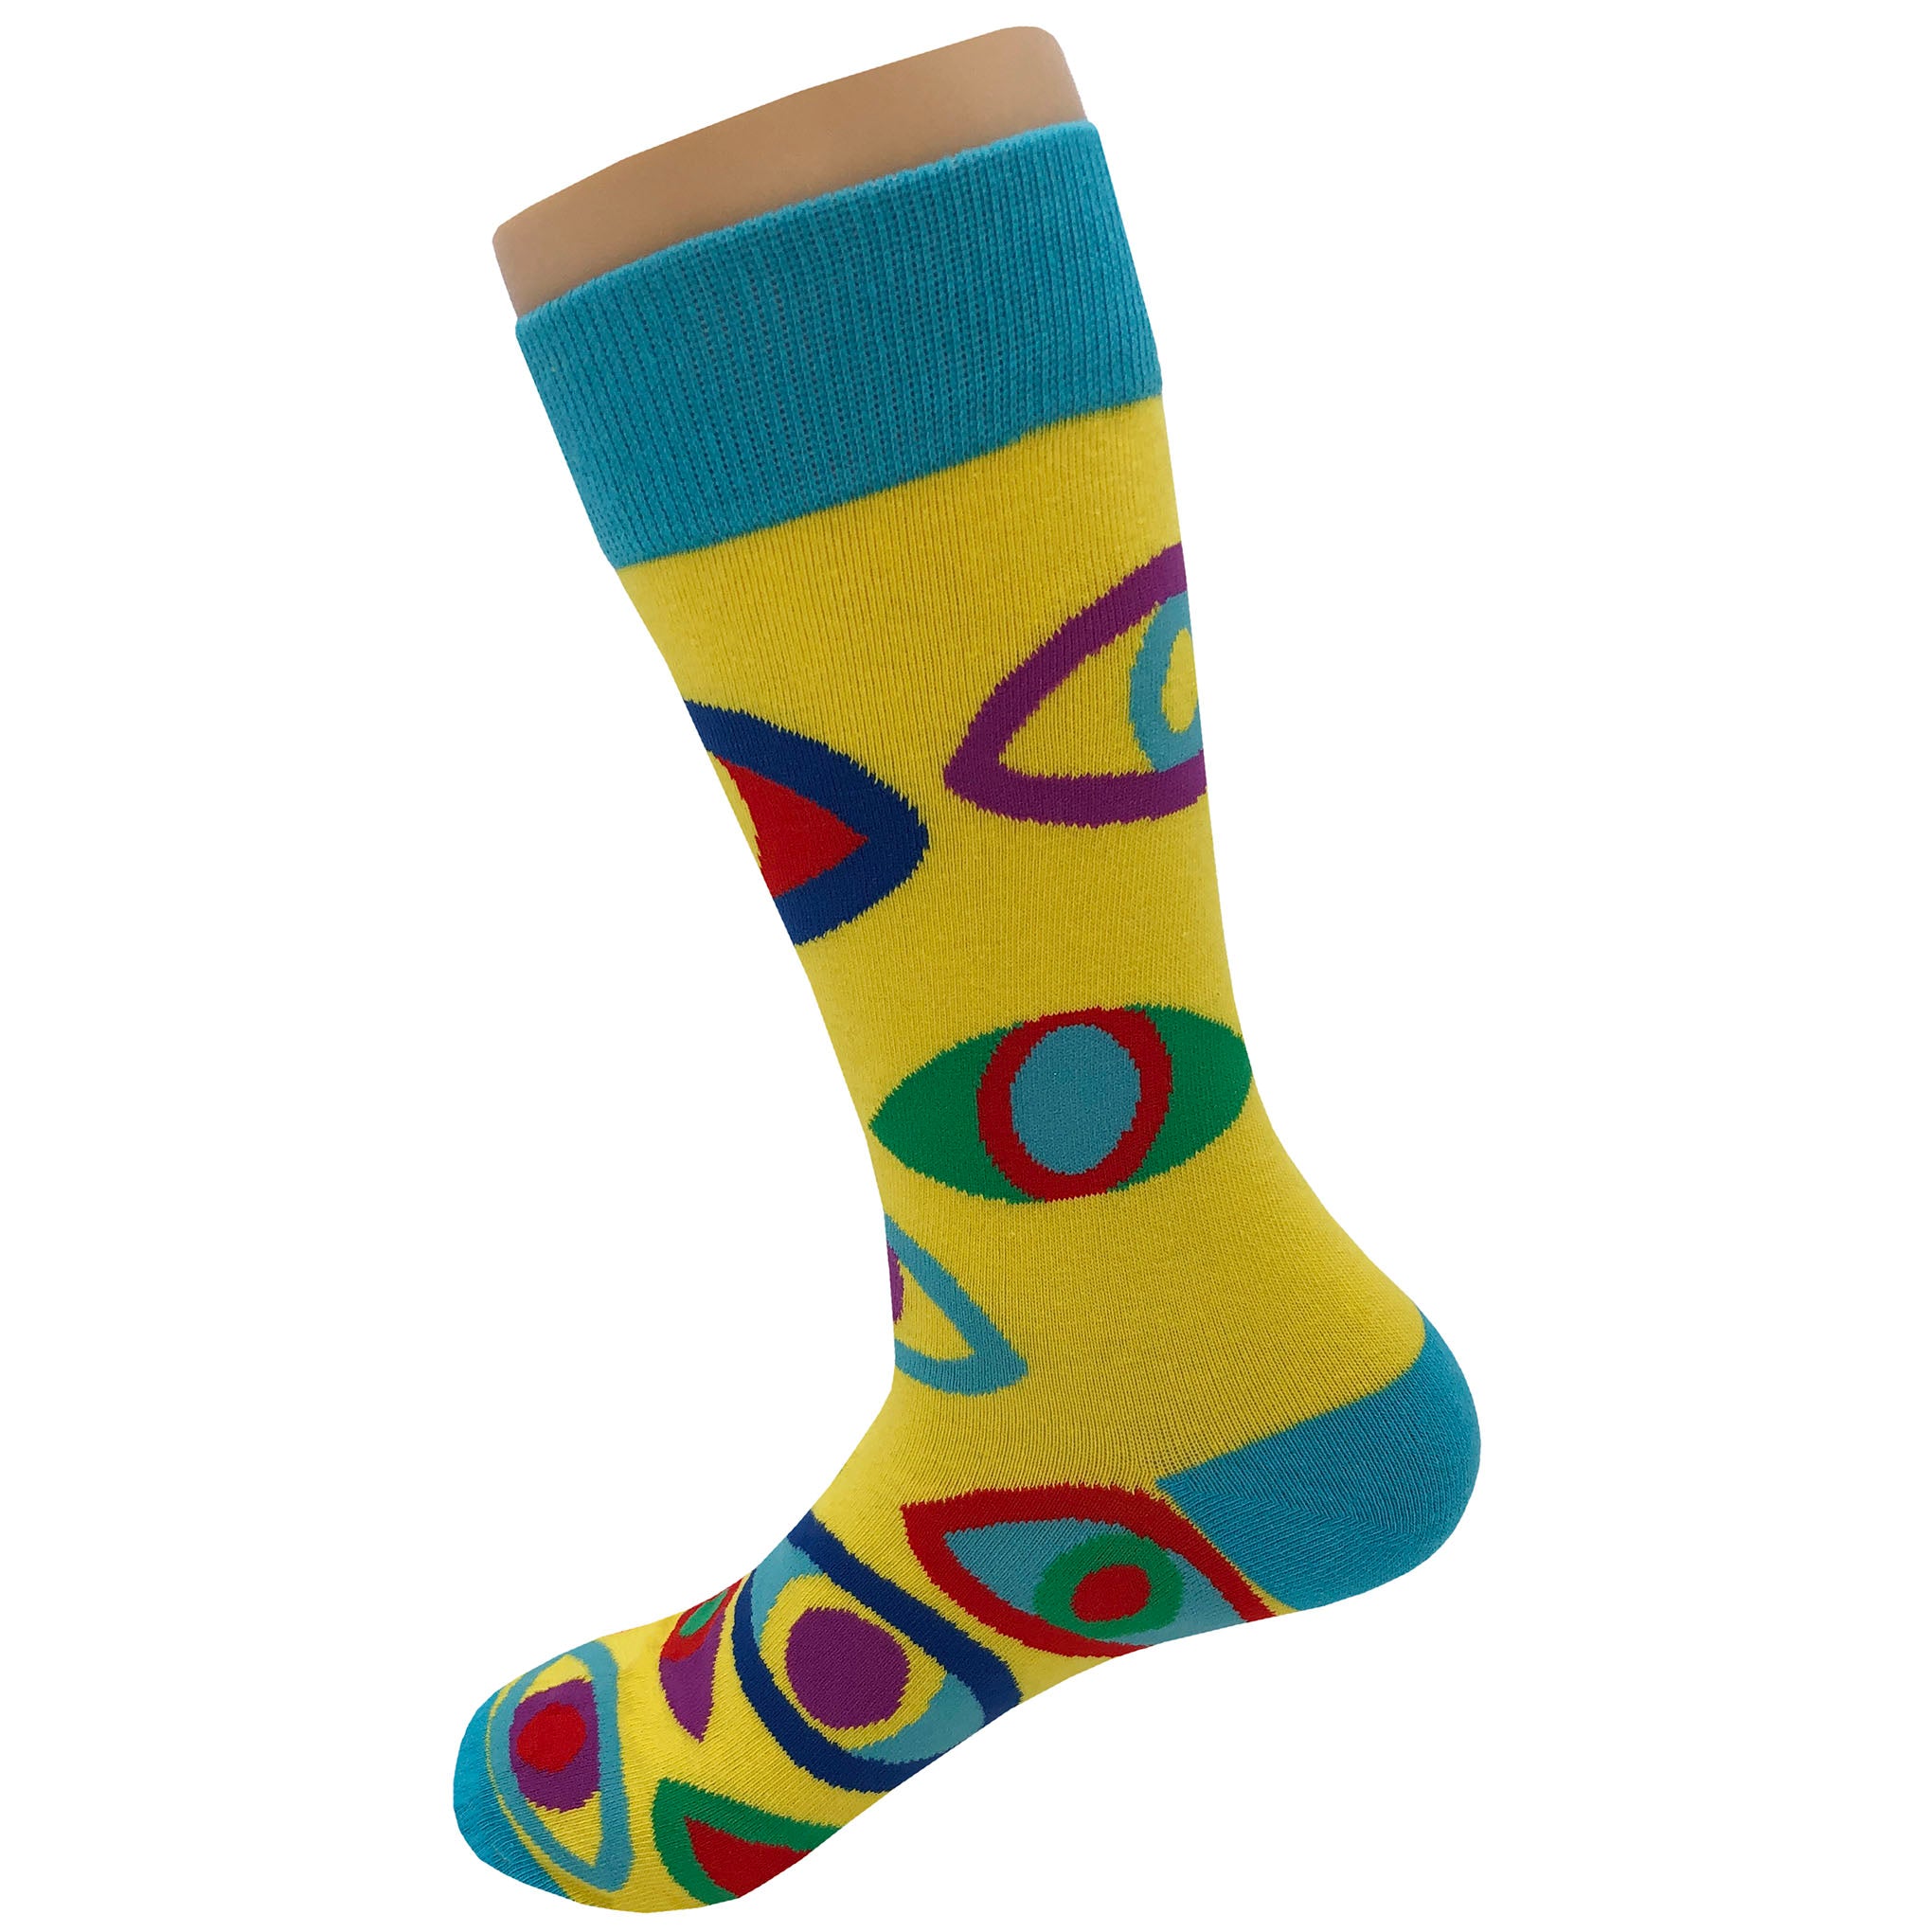 Colorful Eye Socks - Fun and Crazy Socks at Sockfly.com